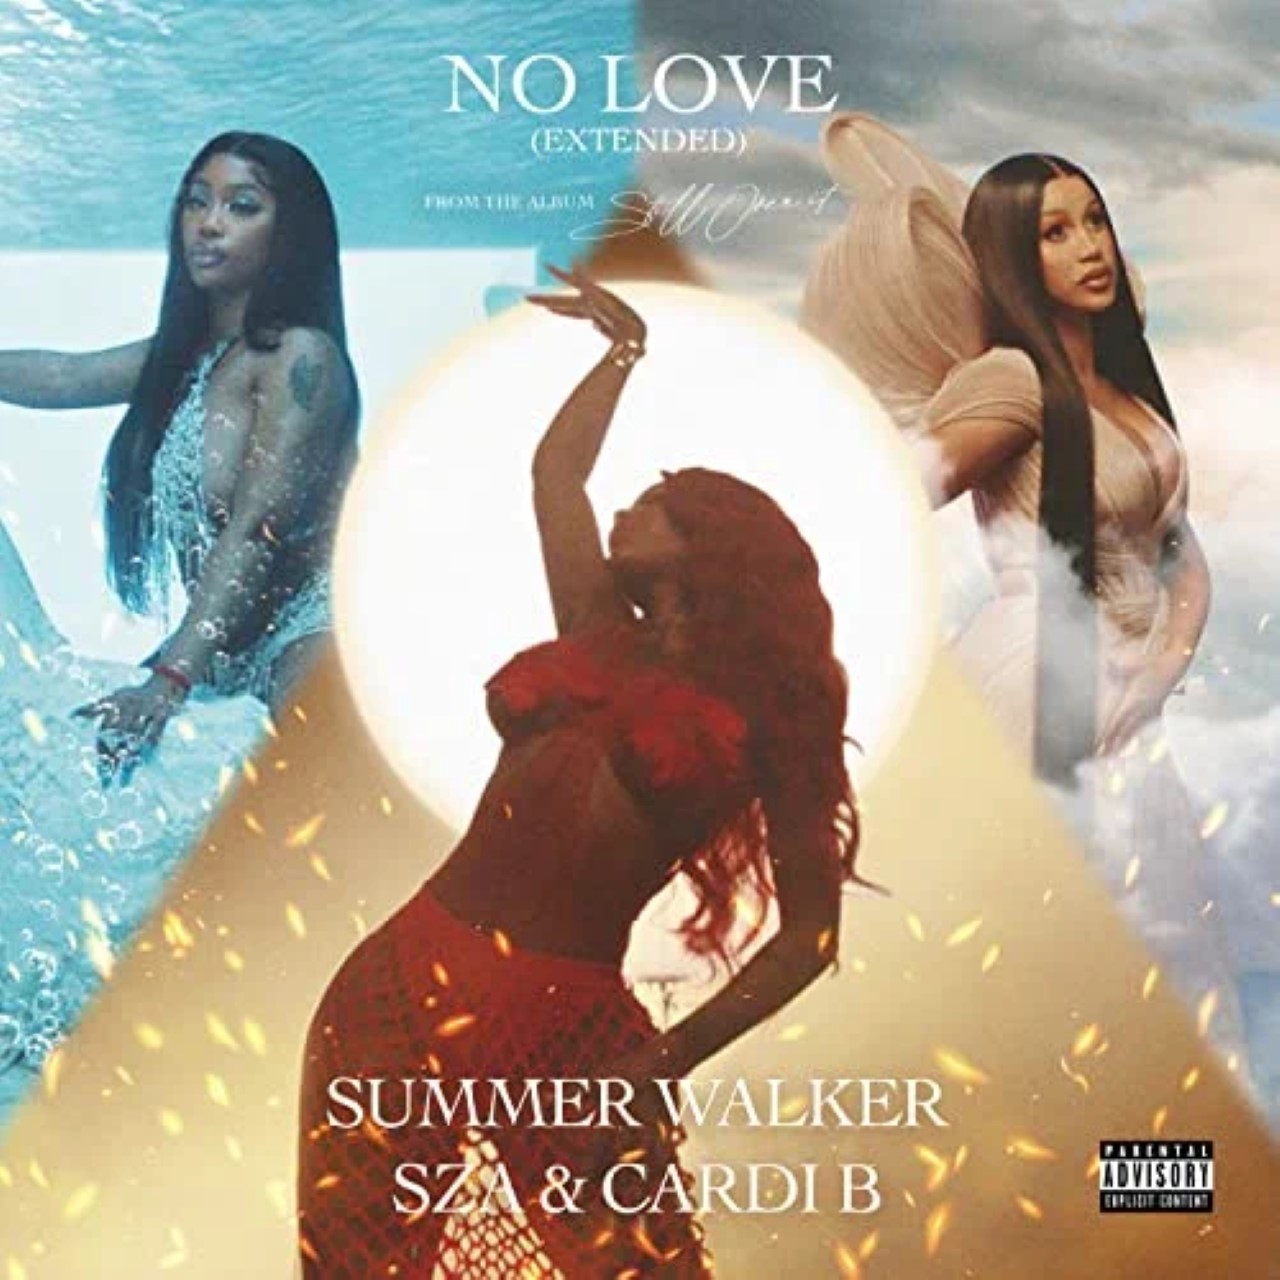 Art for No Love (Remix) ft. SZA & Cardi B by Summer Walker